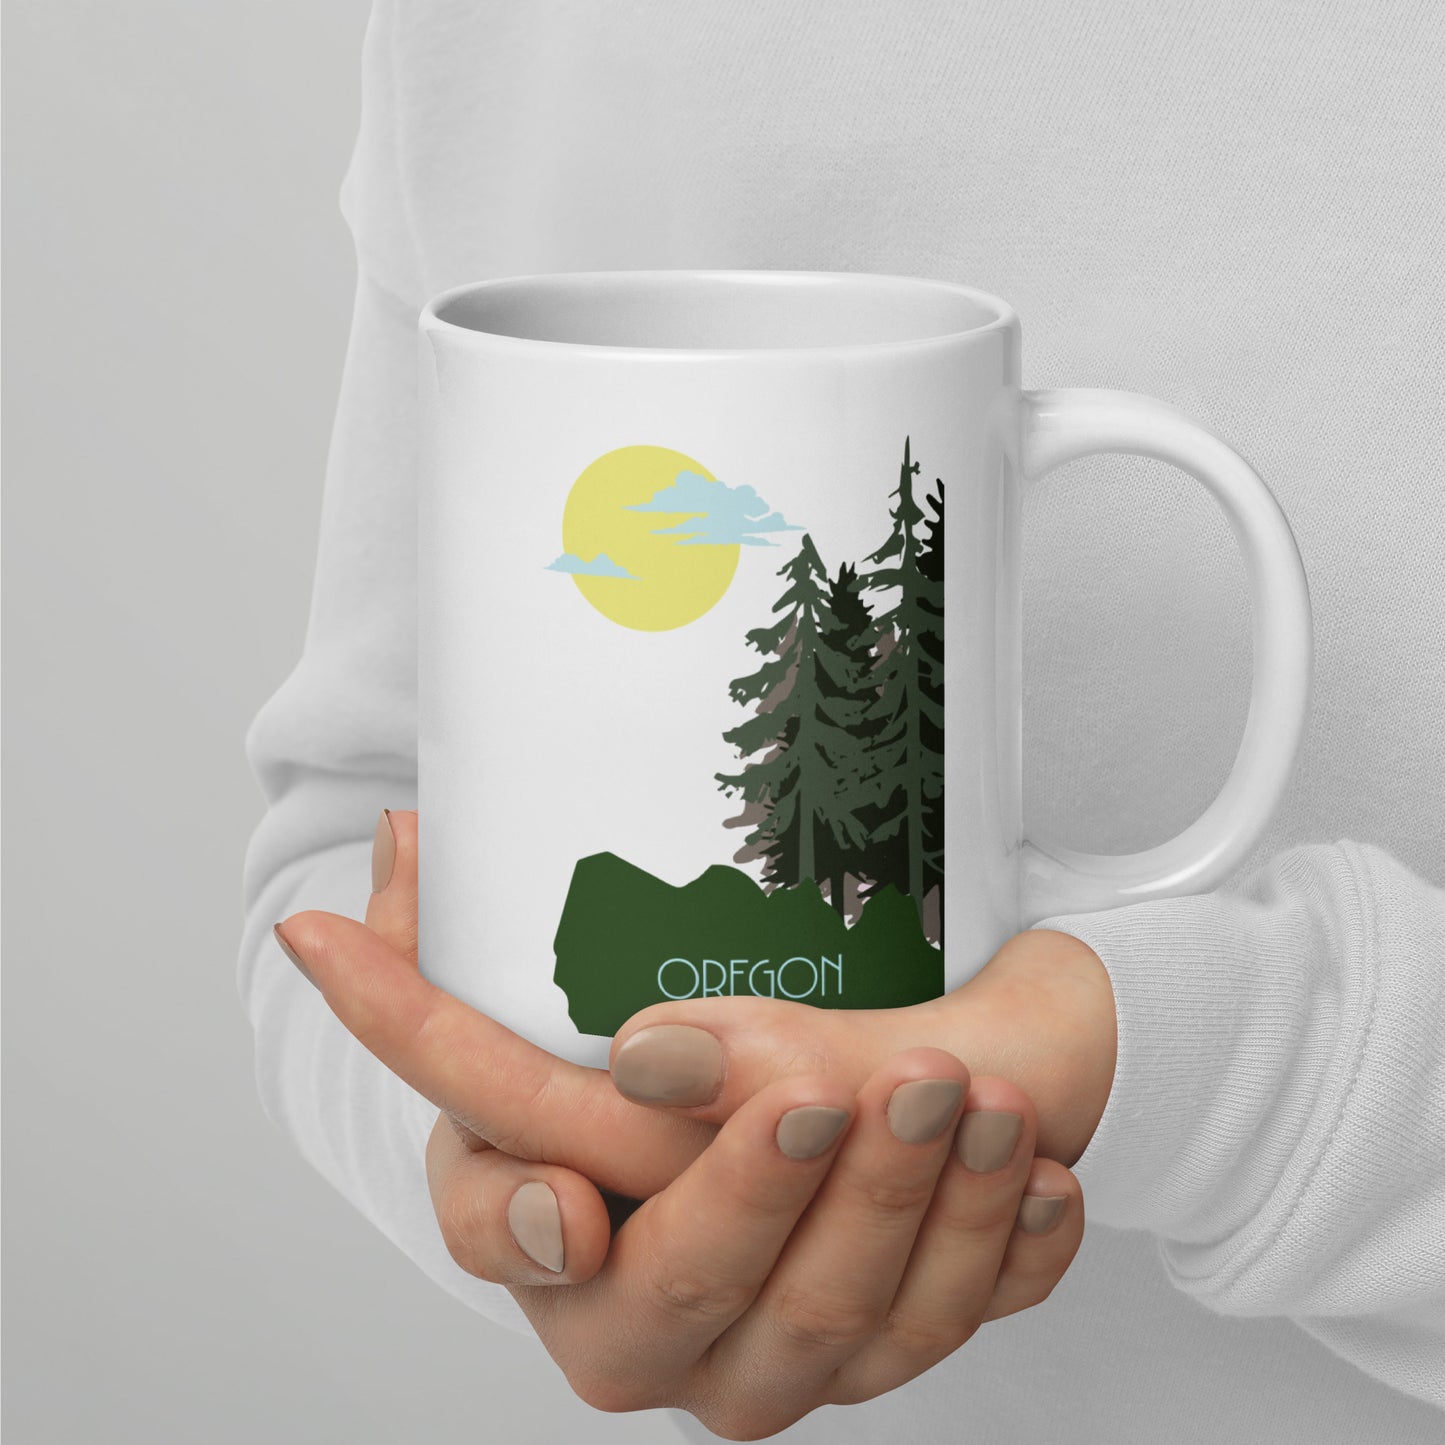 Oregon is Waiting For You - White glossy mug